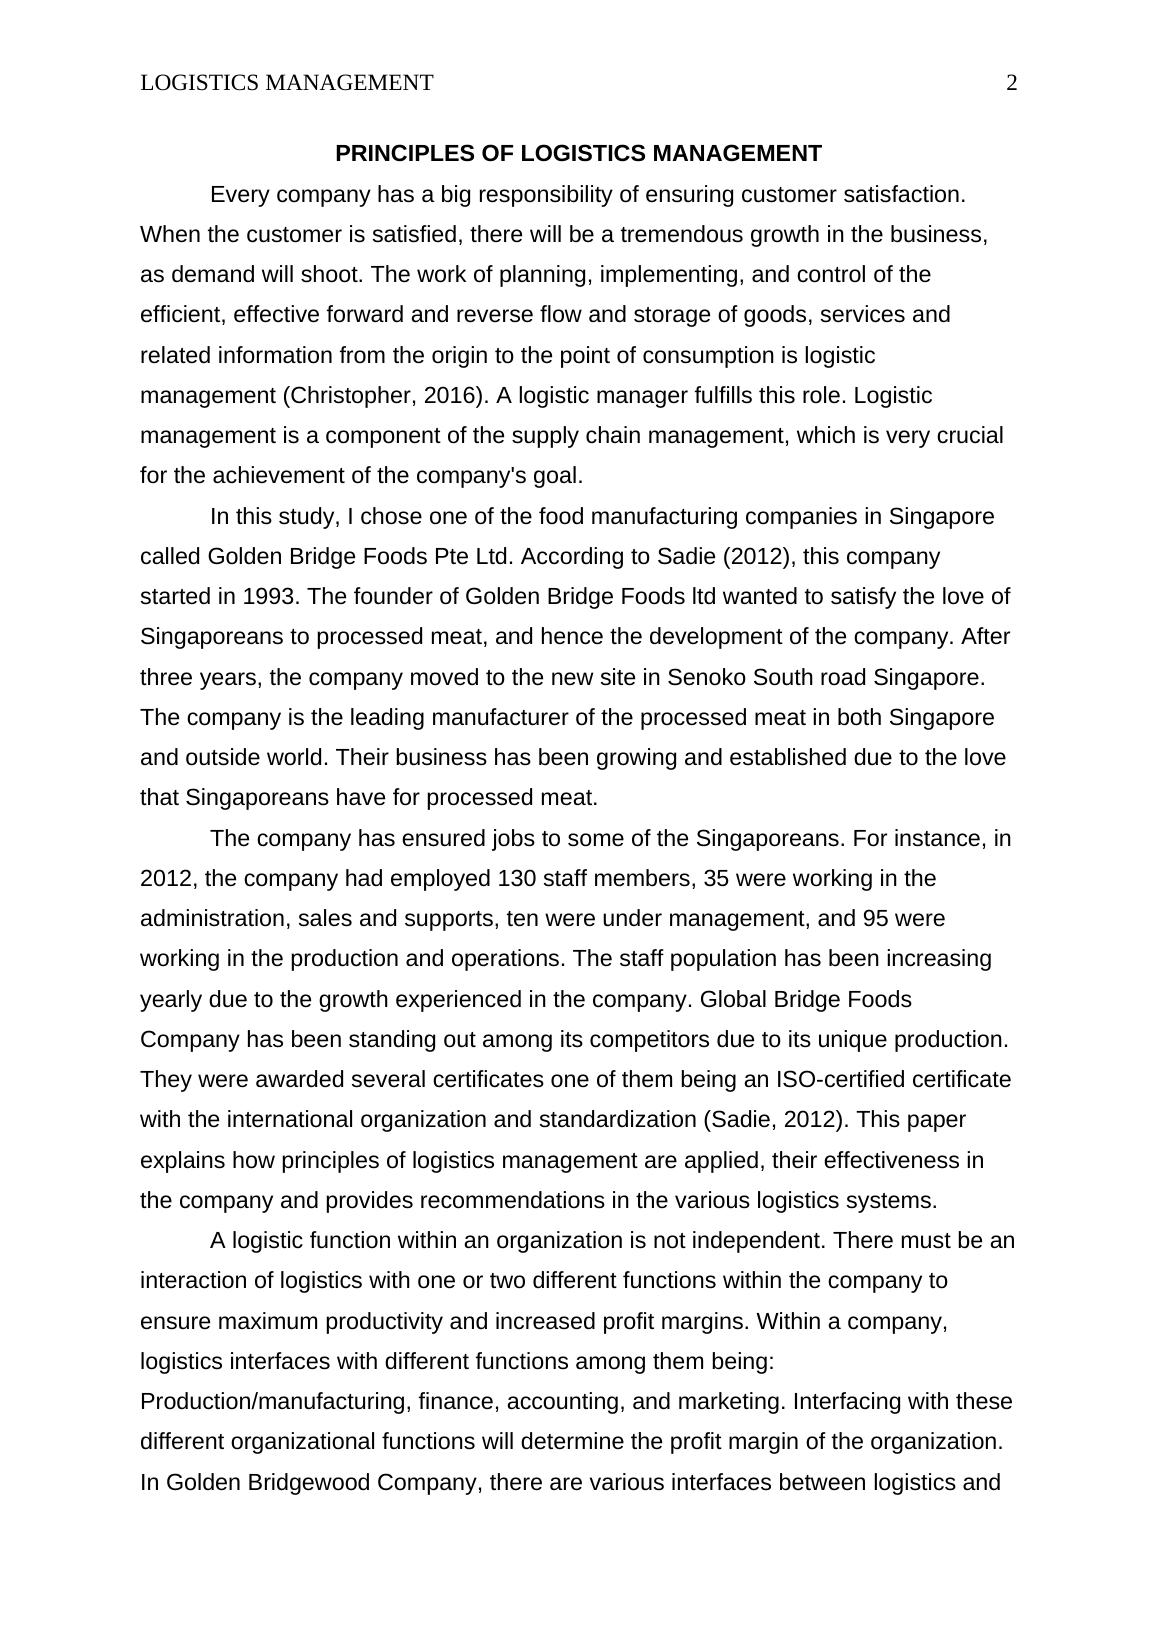 Report on Principles of Logistics Management_2